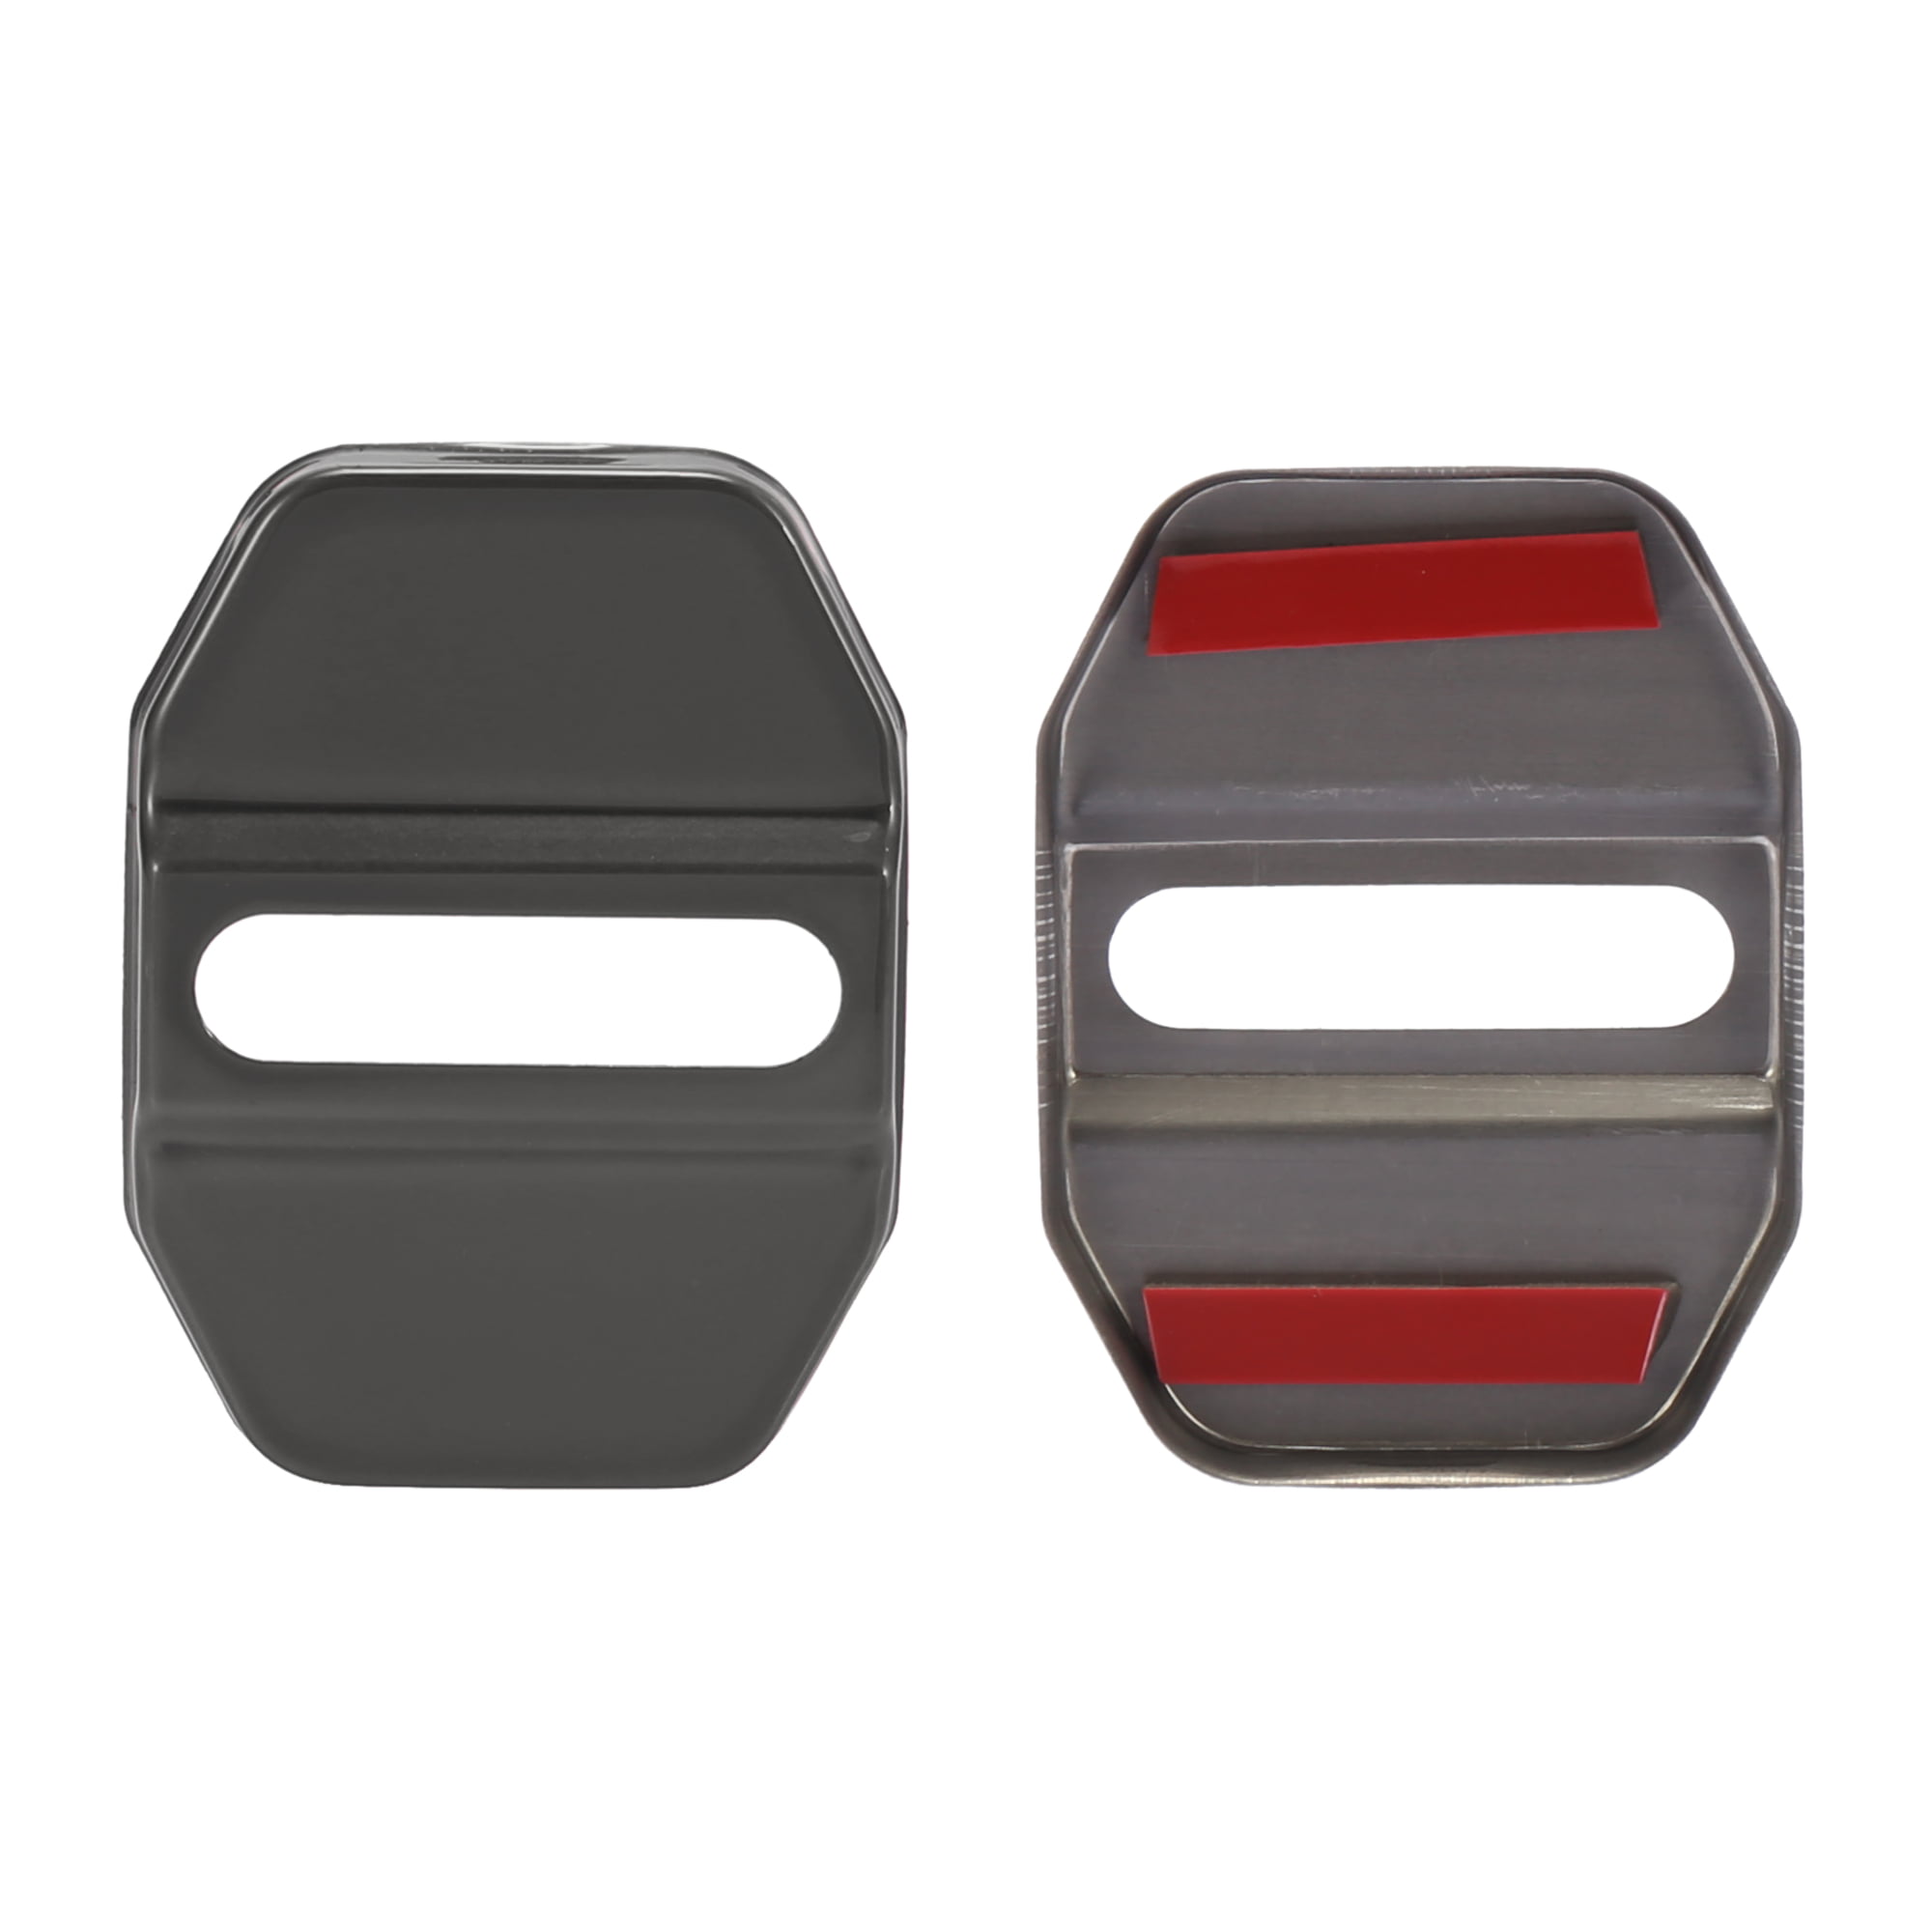 X AUTOHAUX 4pcs Car Door Lock Latches Cover Caps Protector Replacement Stainless Steel for Mercedes-Benz Titanium Tone 